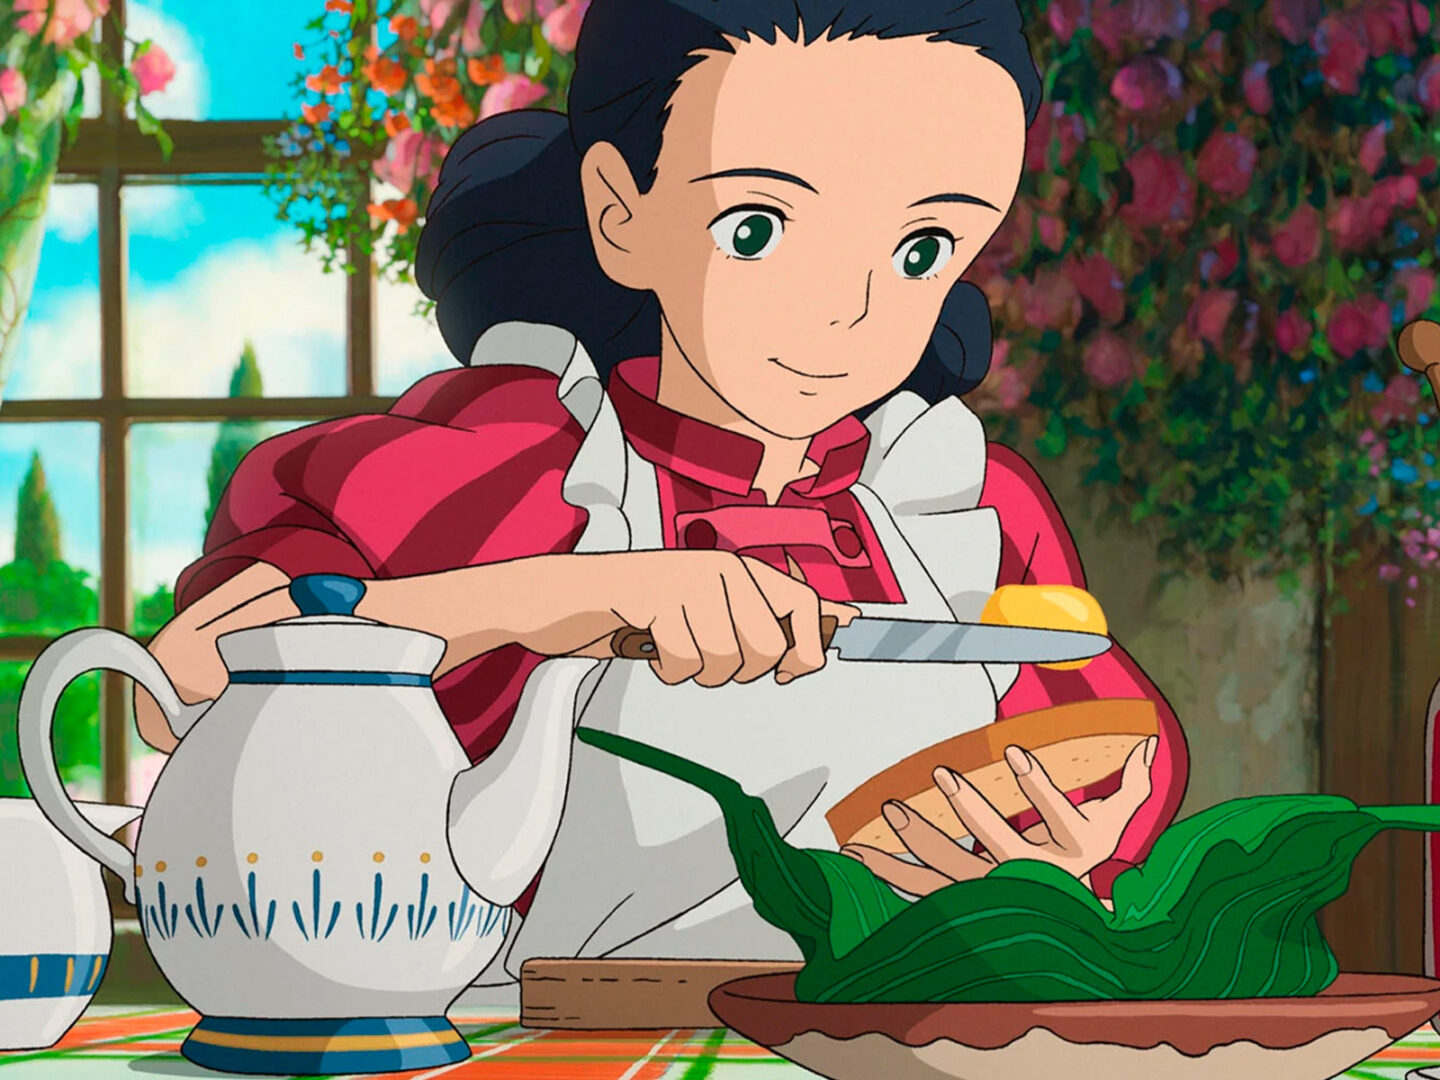 Studio Ghibli unveils new images from Hayao Miyazaki’s latest film